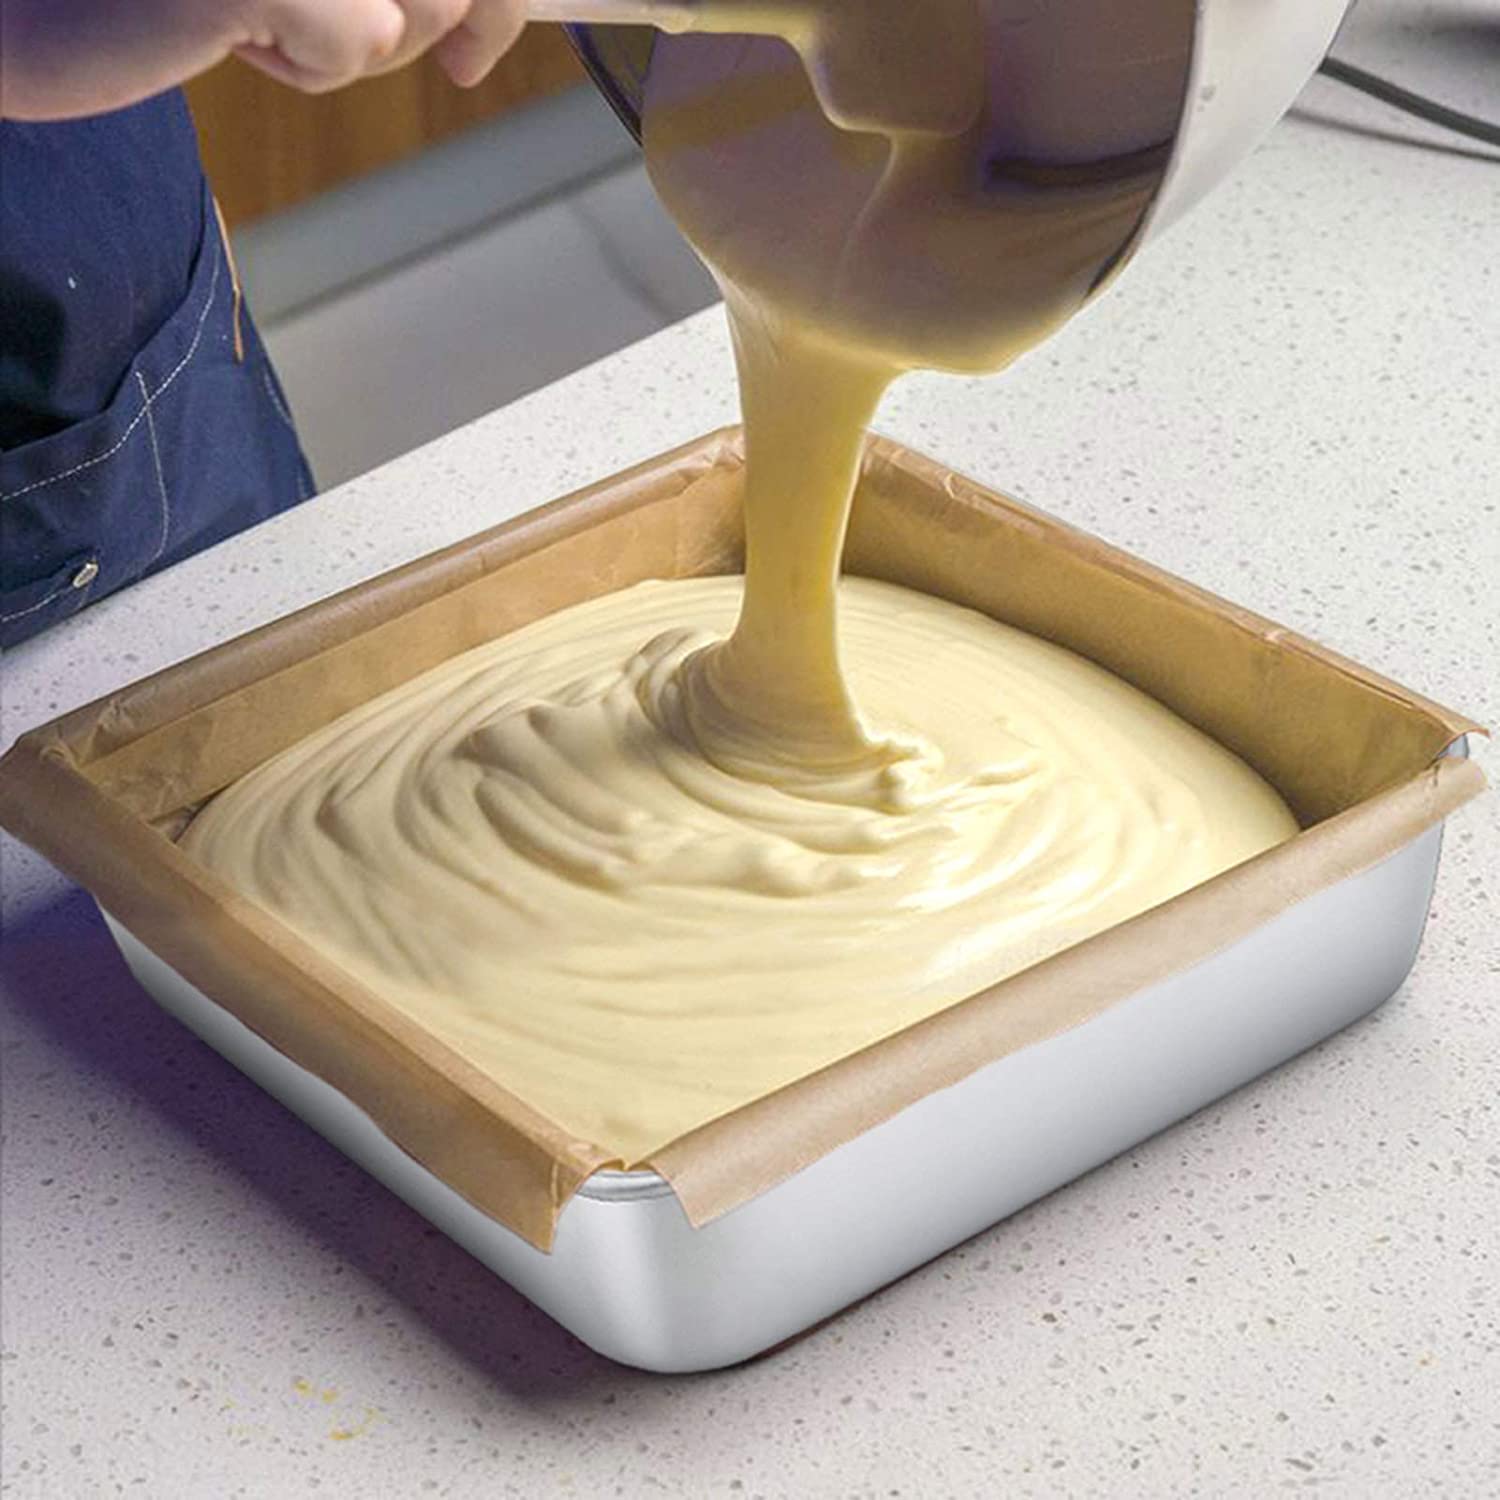 Square 8x8 BROWNIE PAN CAKE PAN or Lasagna Pan 18/10 Stainless Steel –  Health Craft